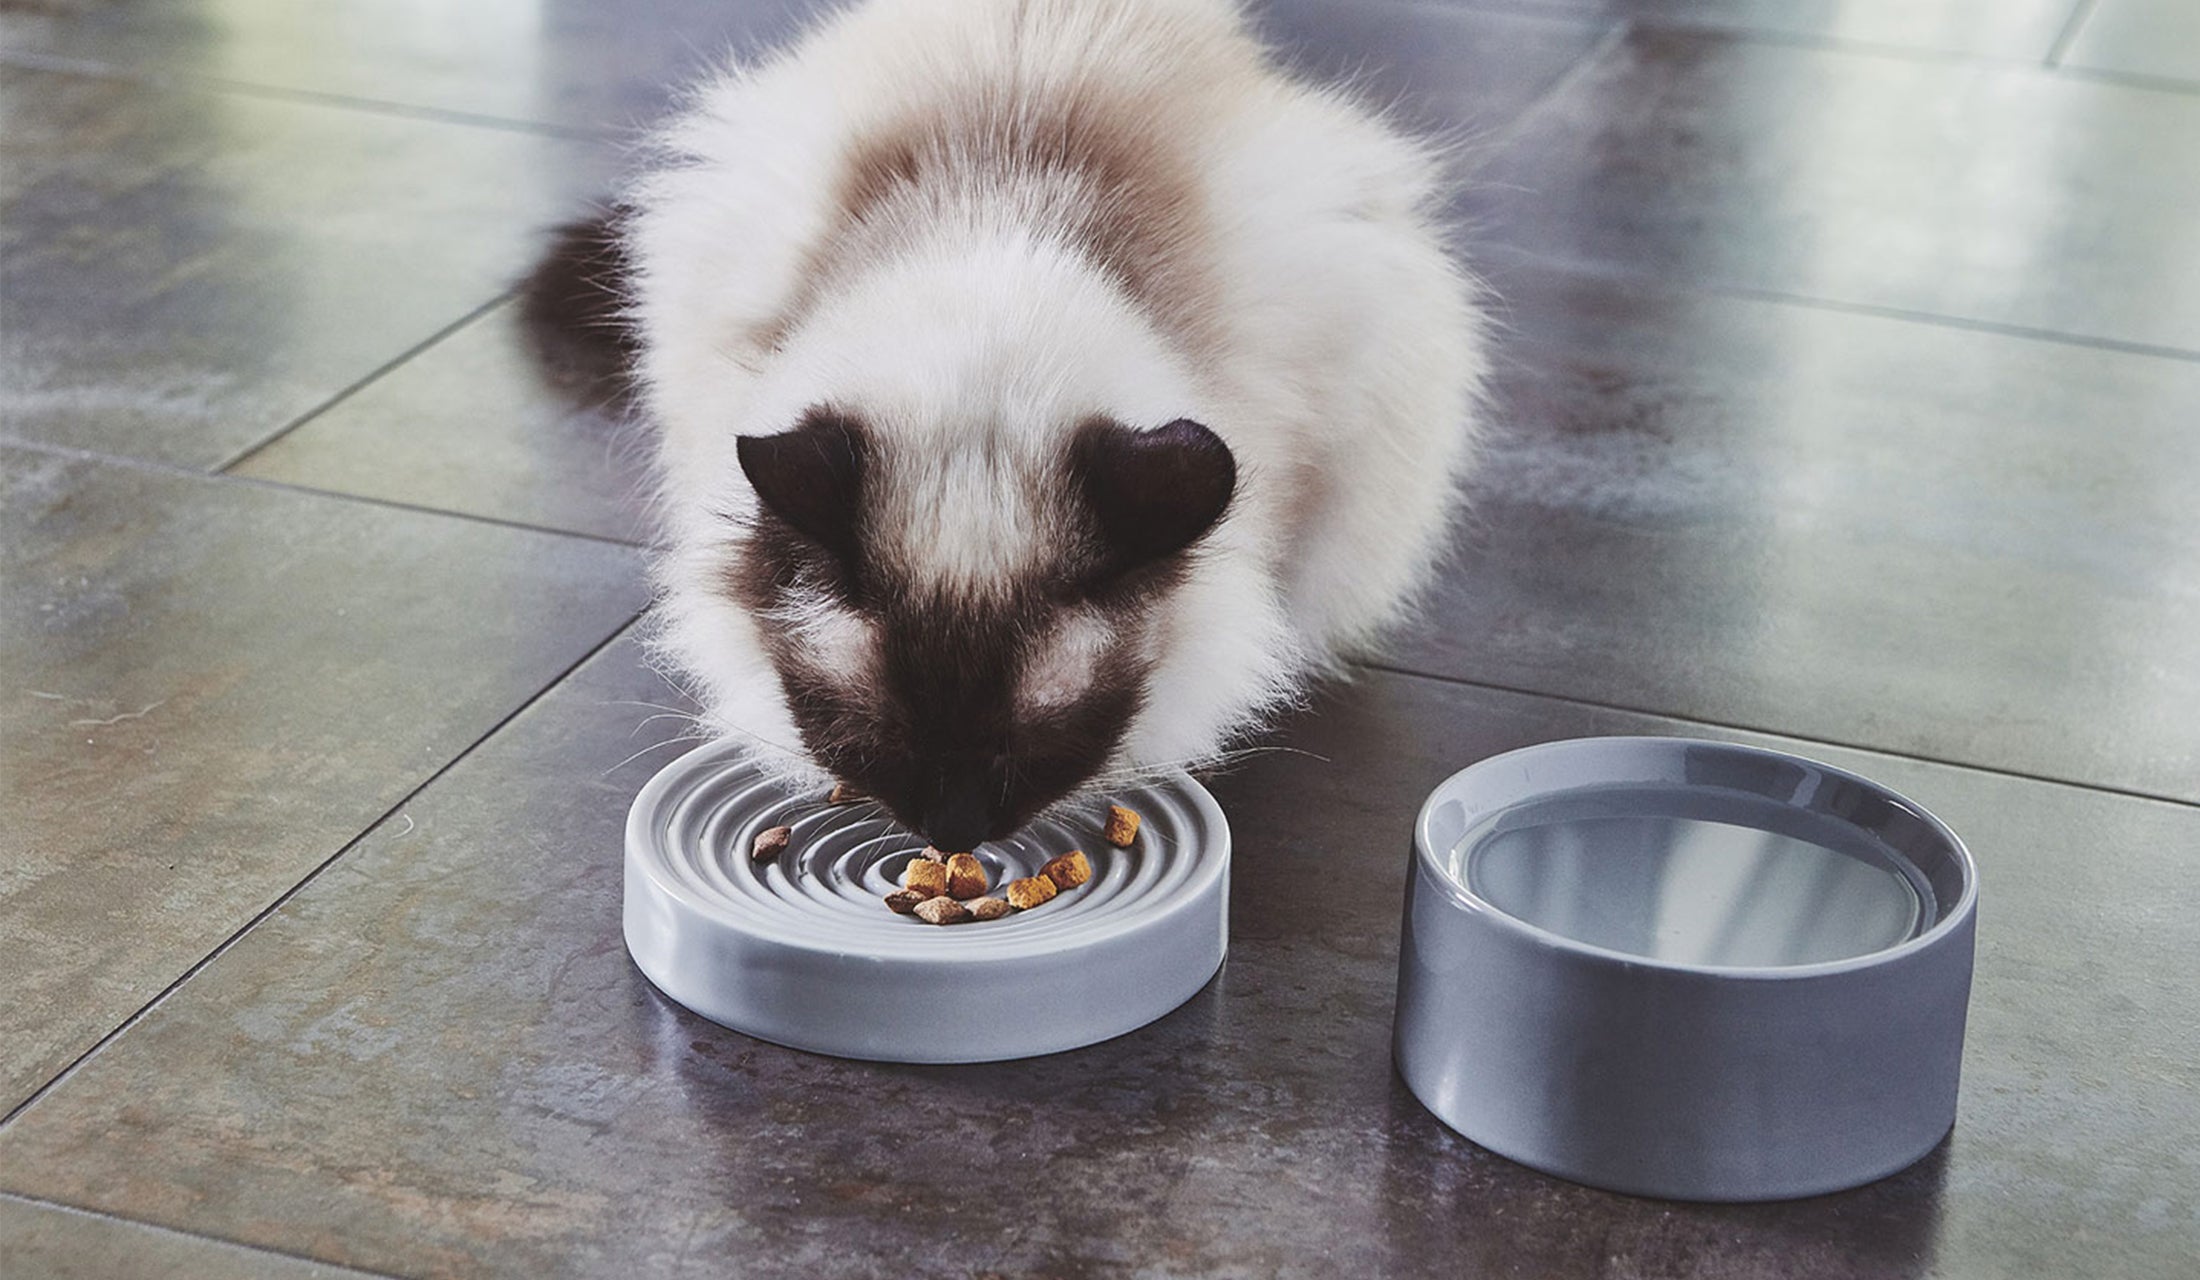 MiaCara Tondo Cat Bowl available at THE GOOD PET HOME